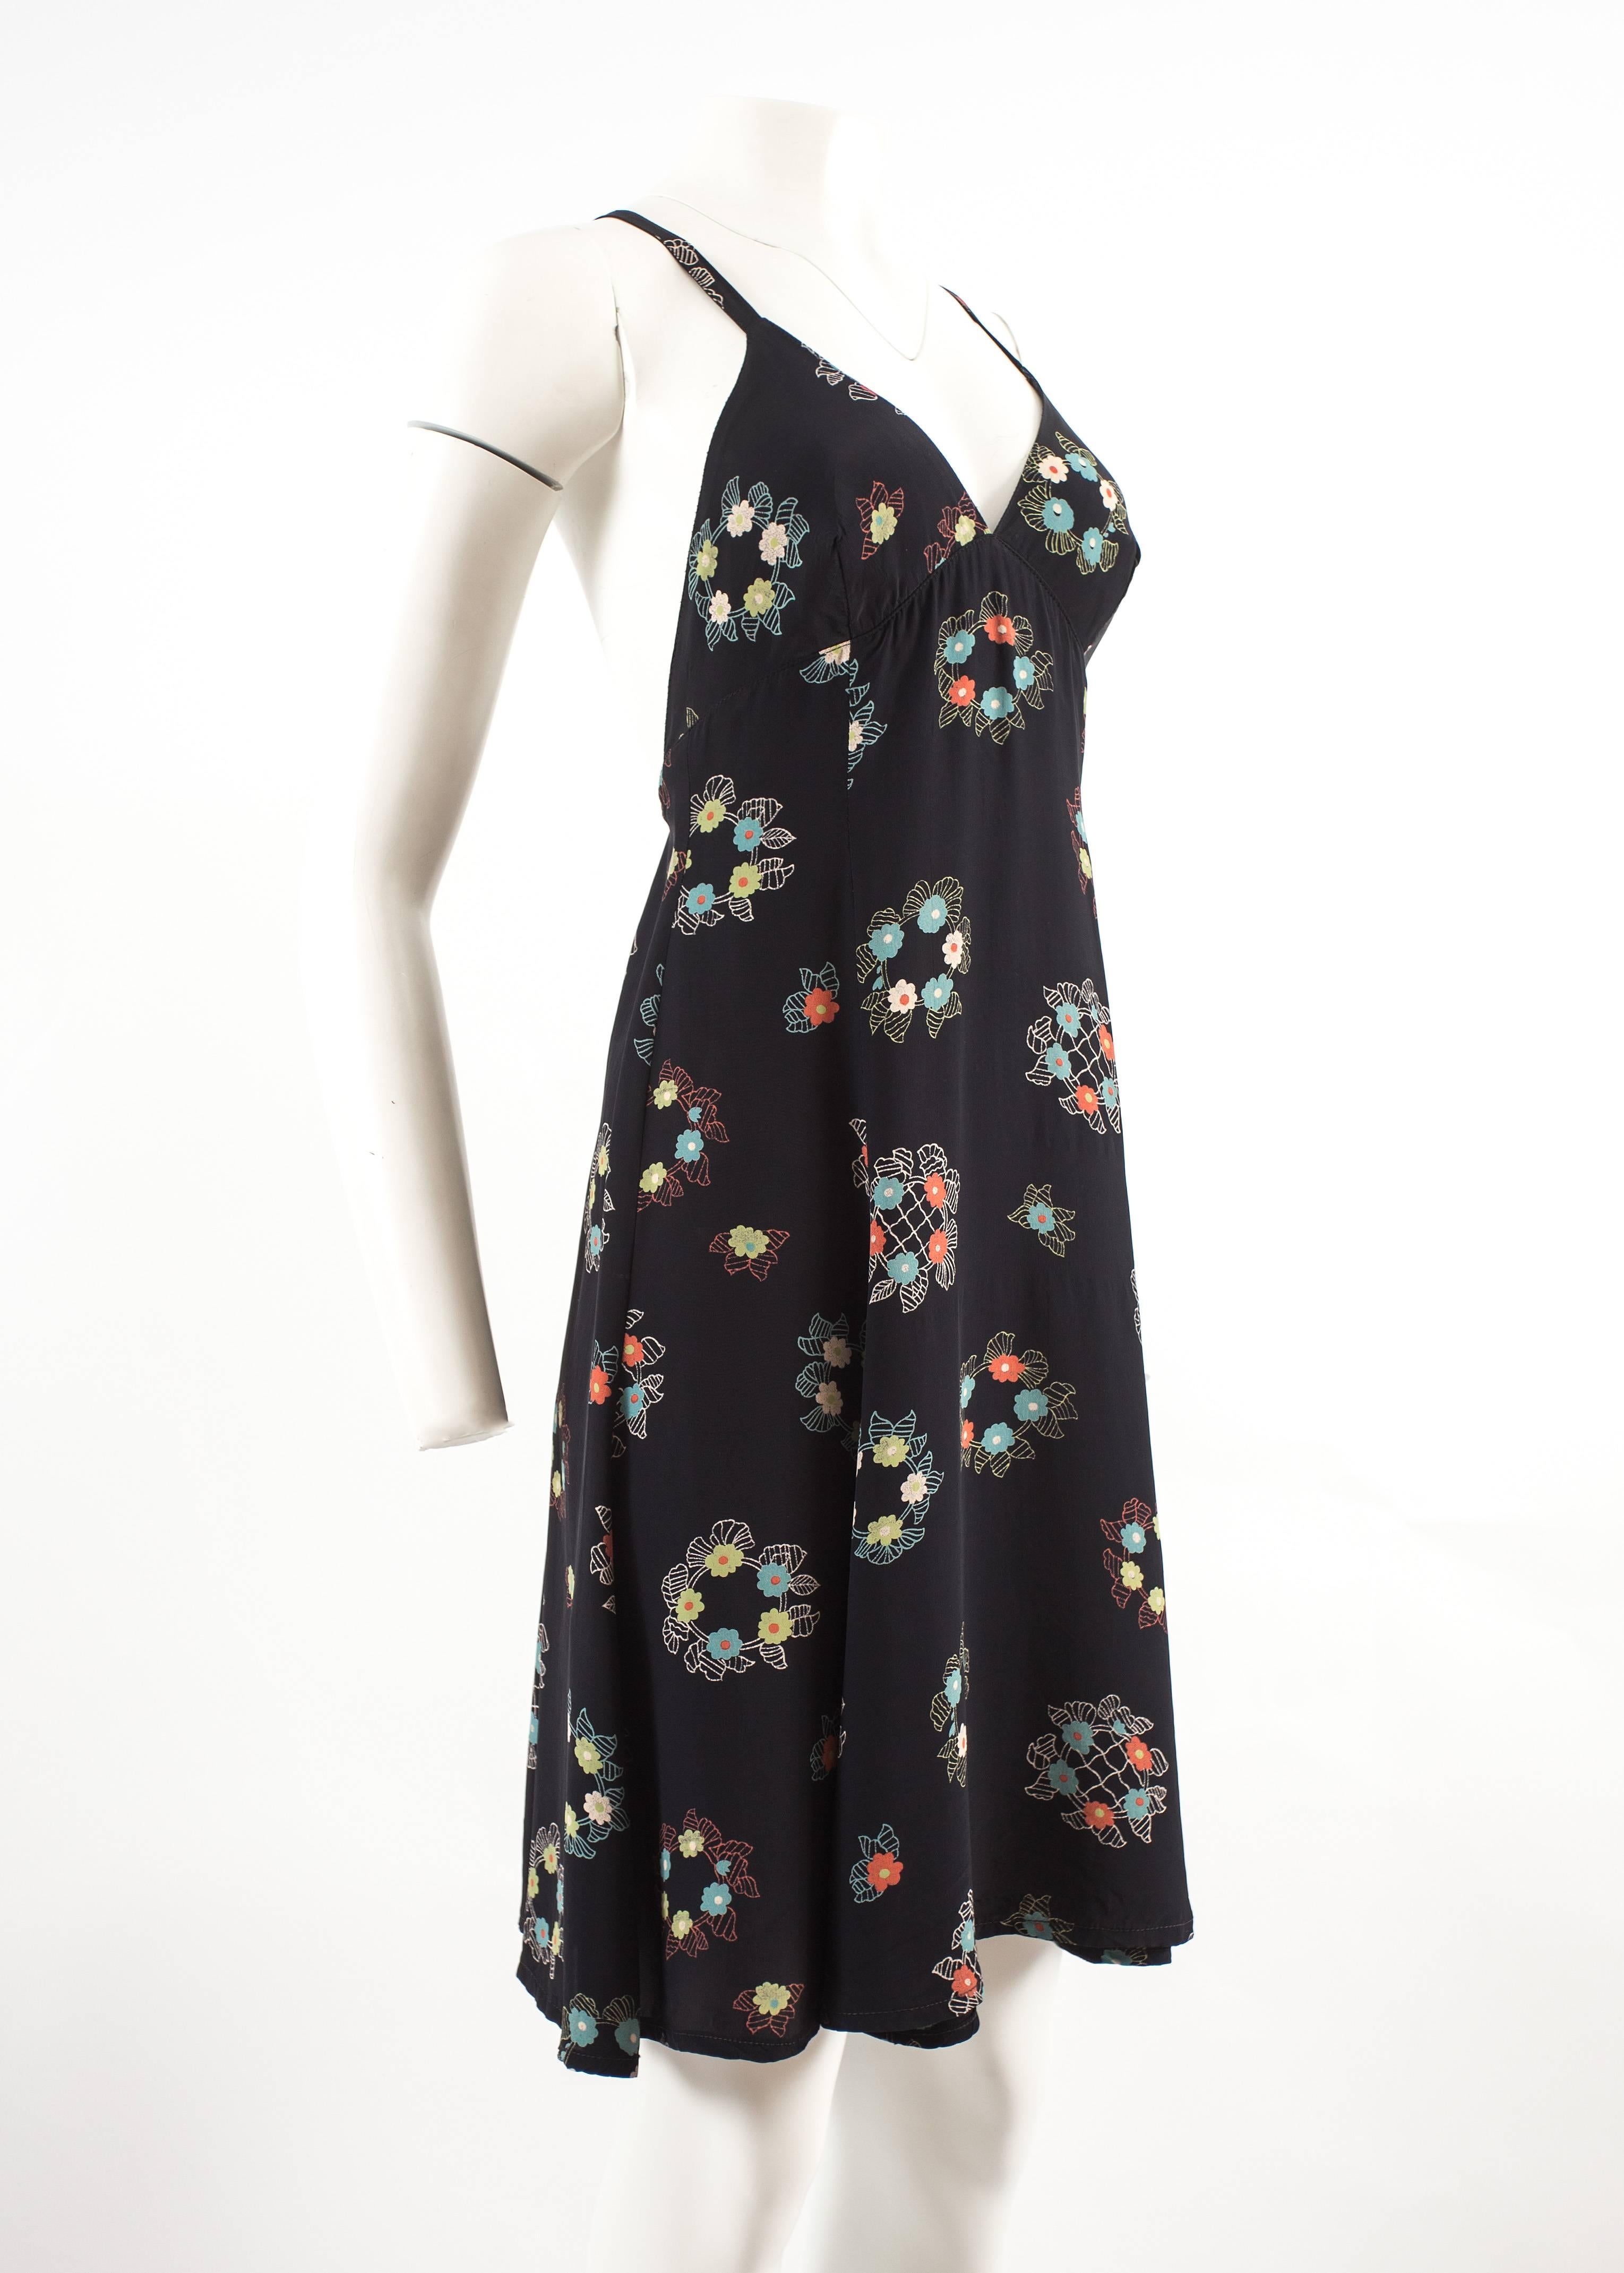 Black Ossie Clark 1970 mid length summer dress with Celia Birtwell print